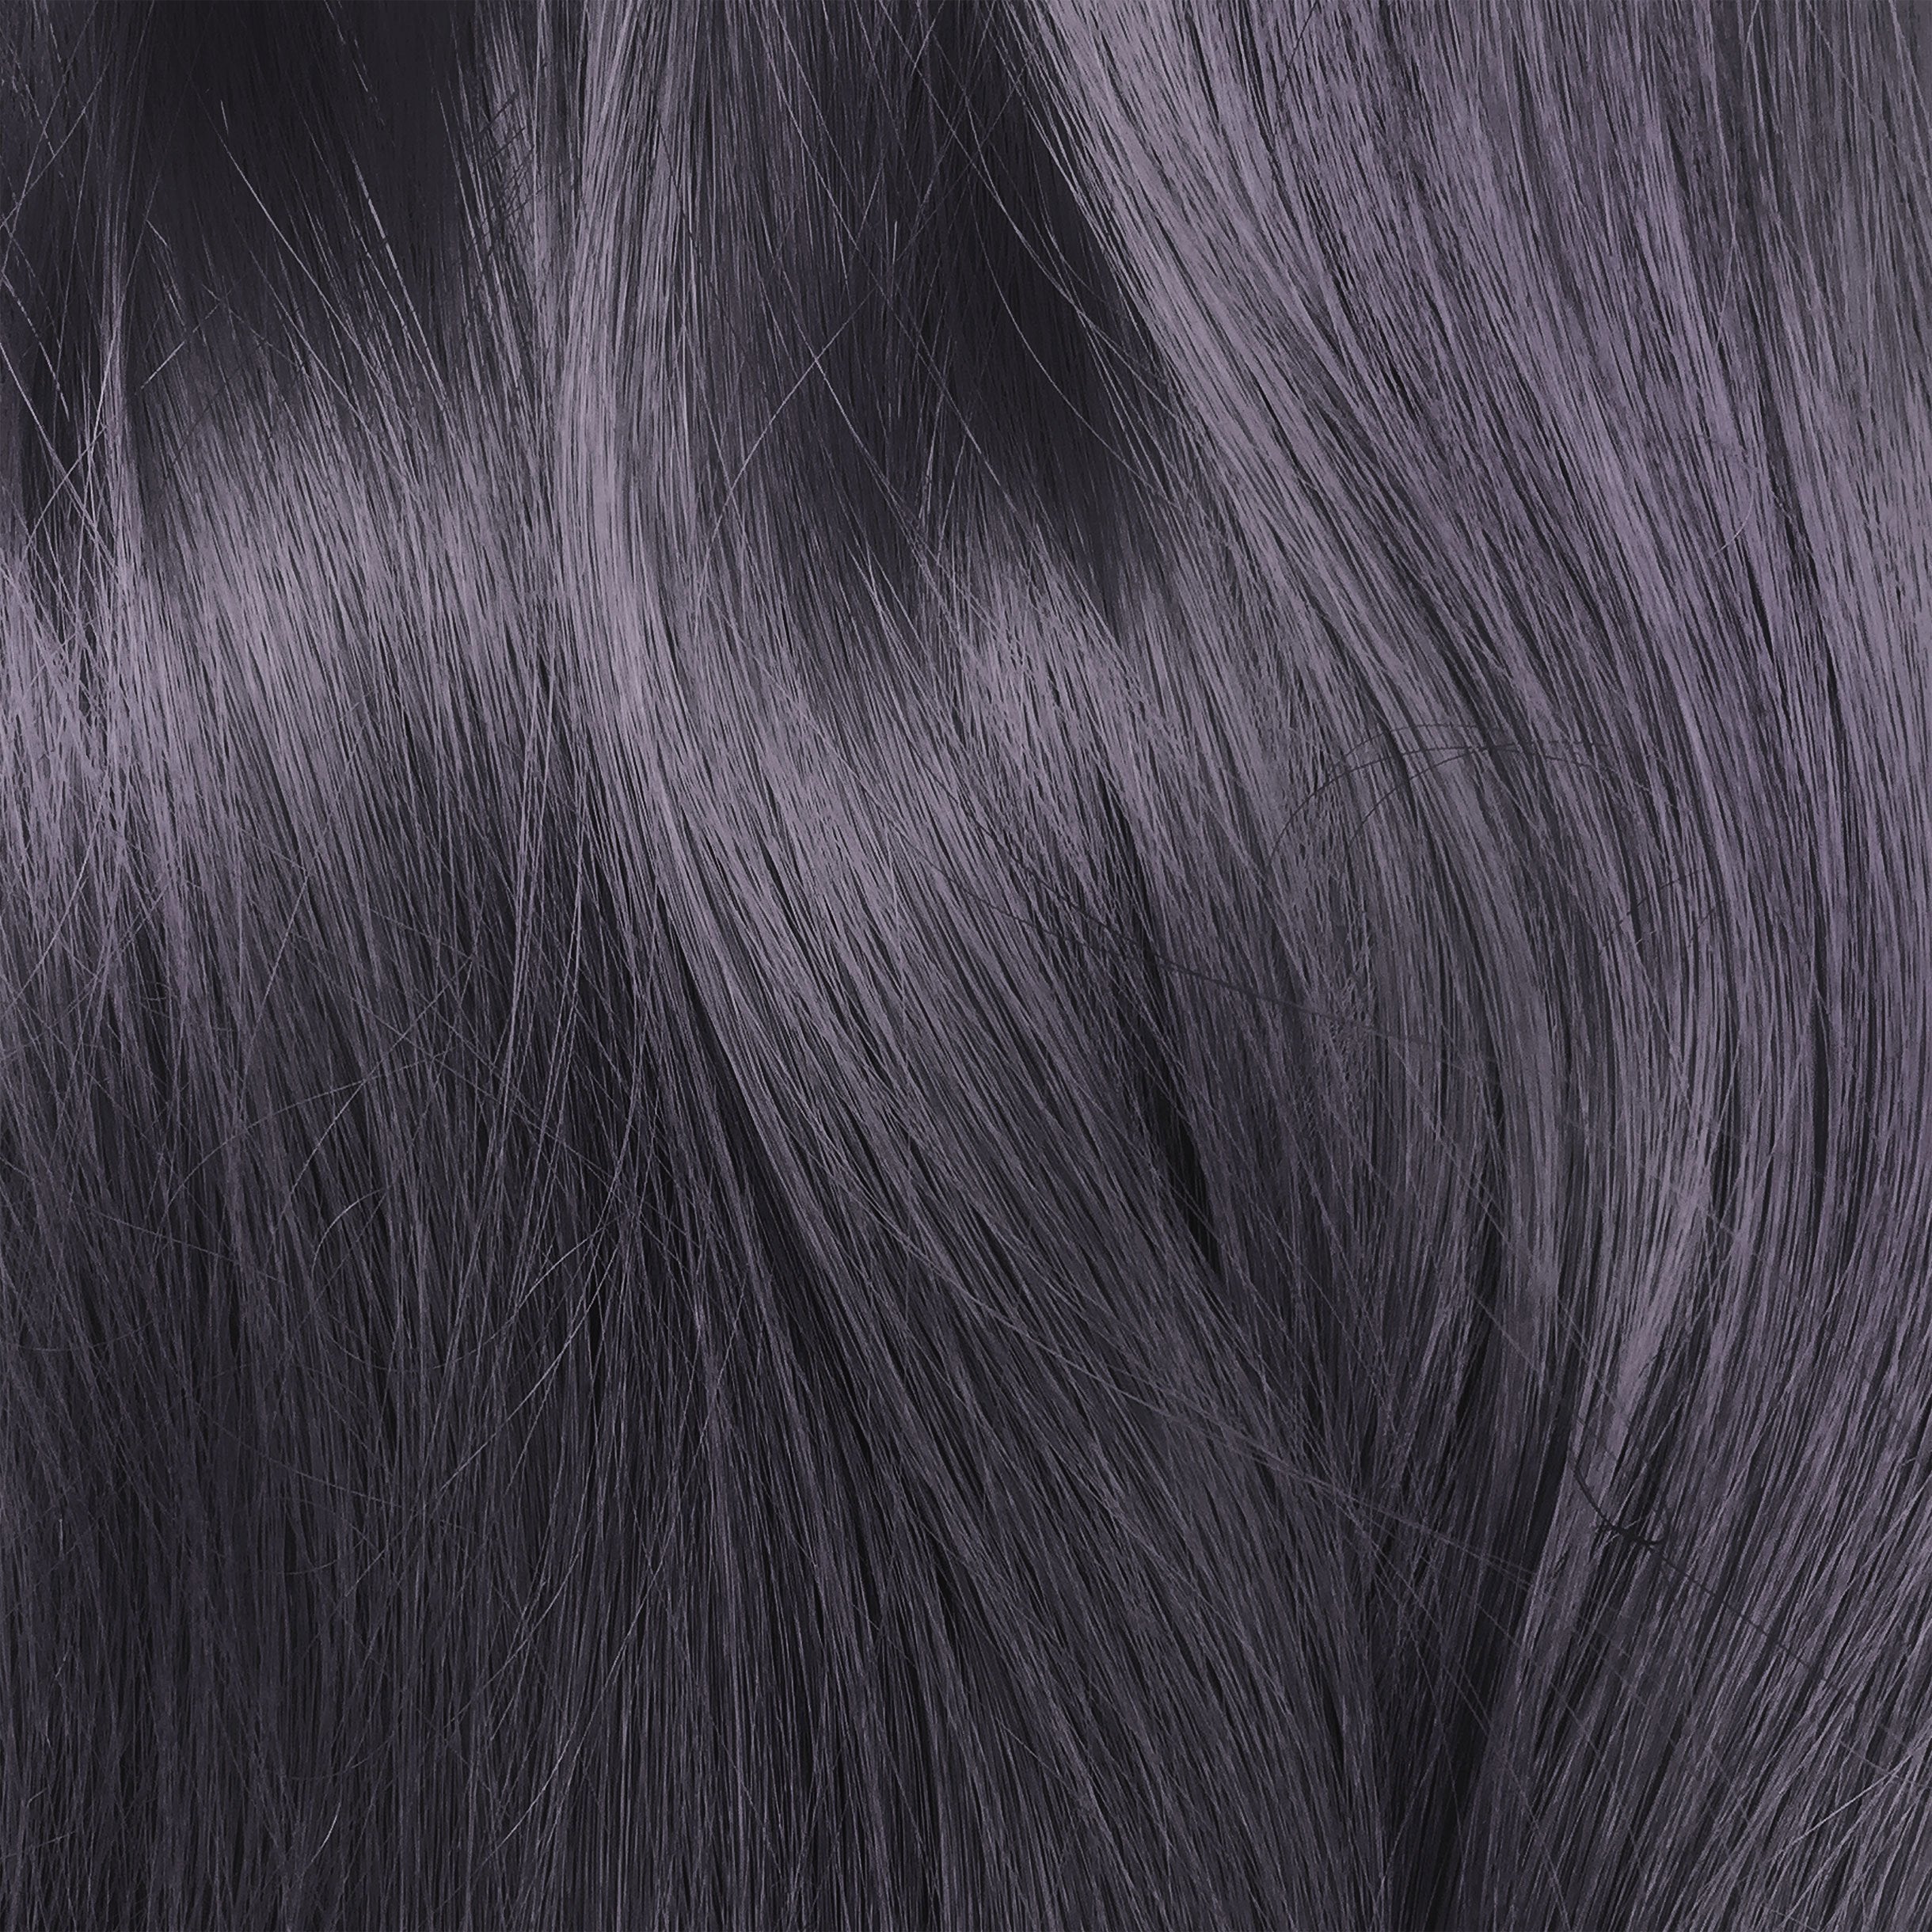 Unicorn Hair Tints variant:Gargoyle